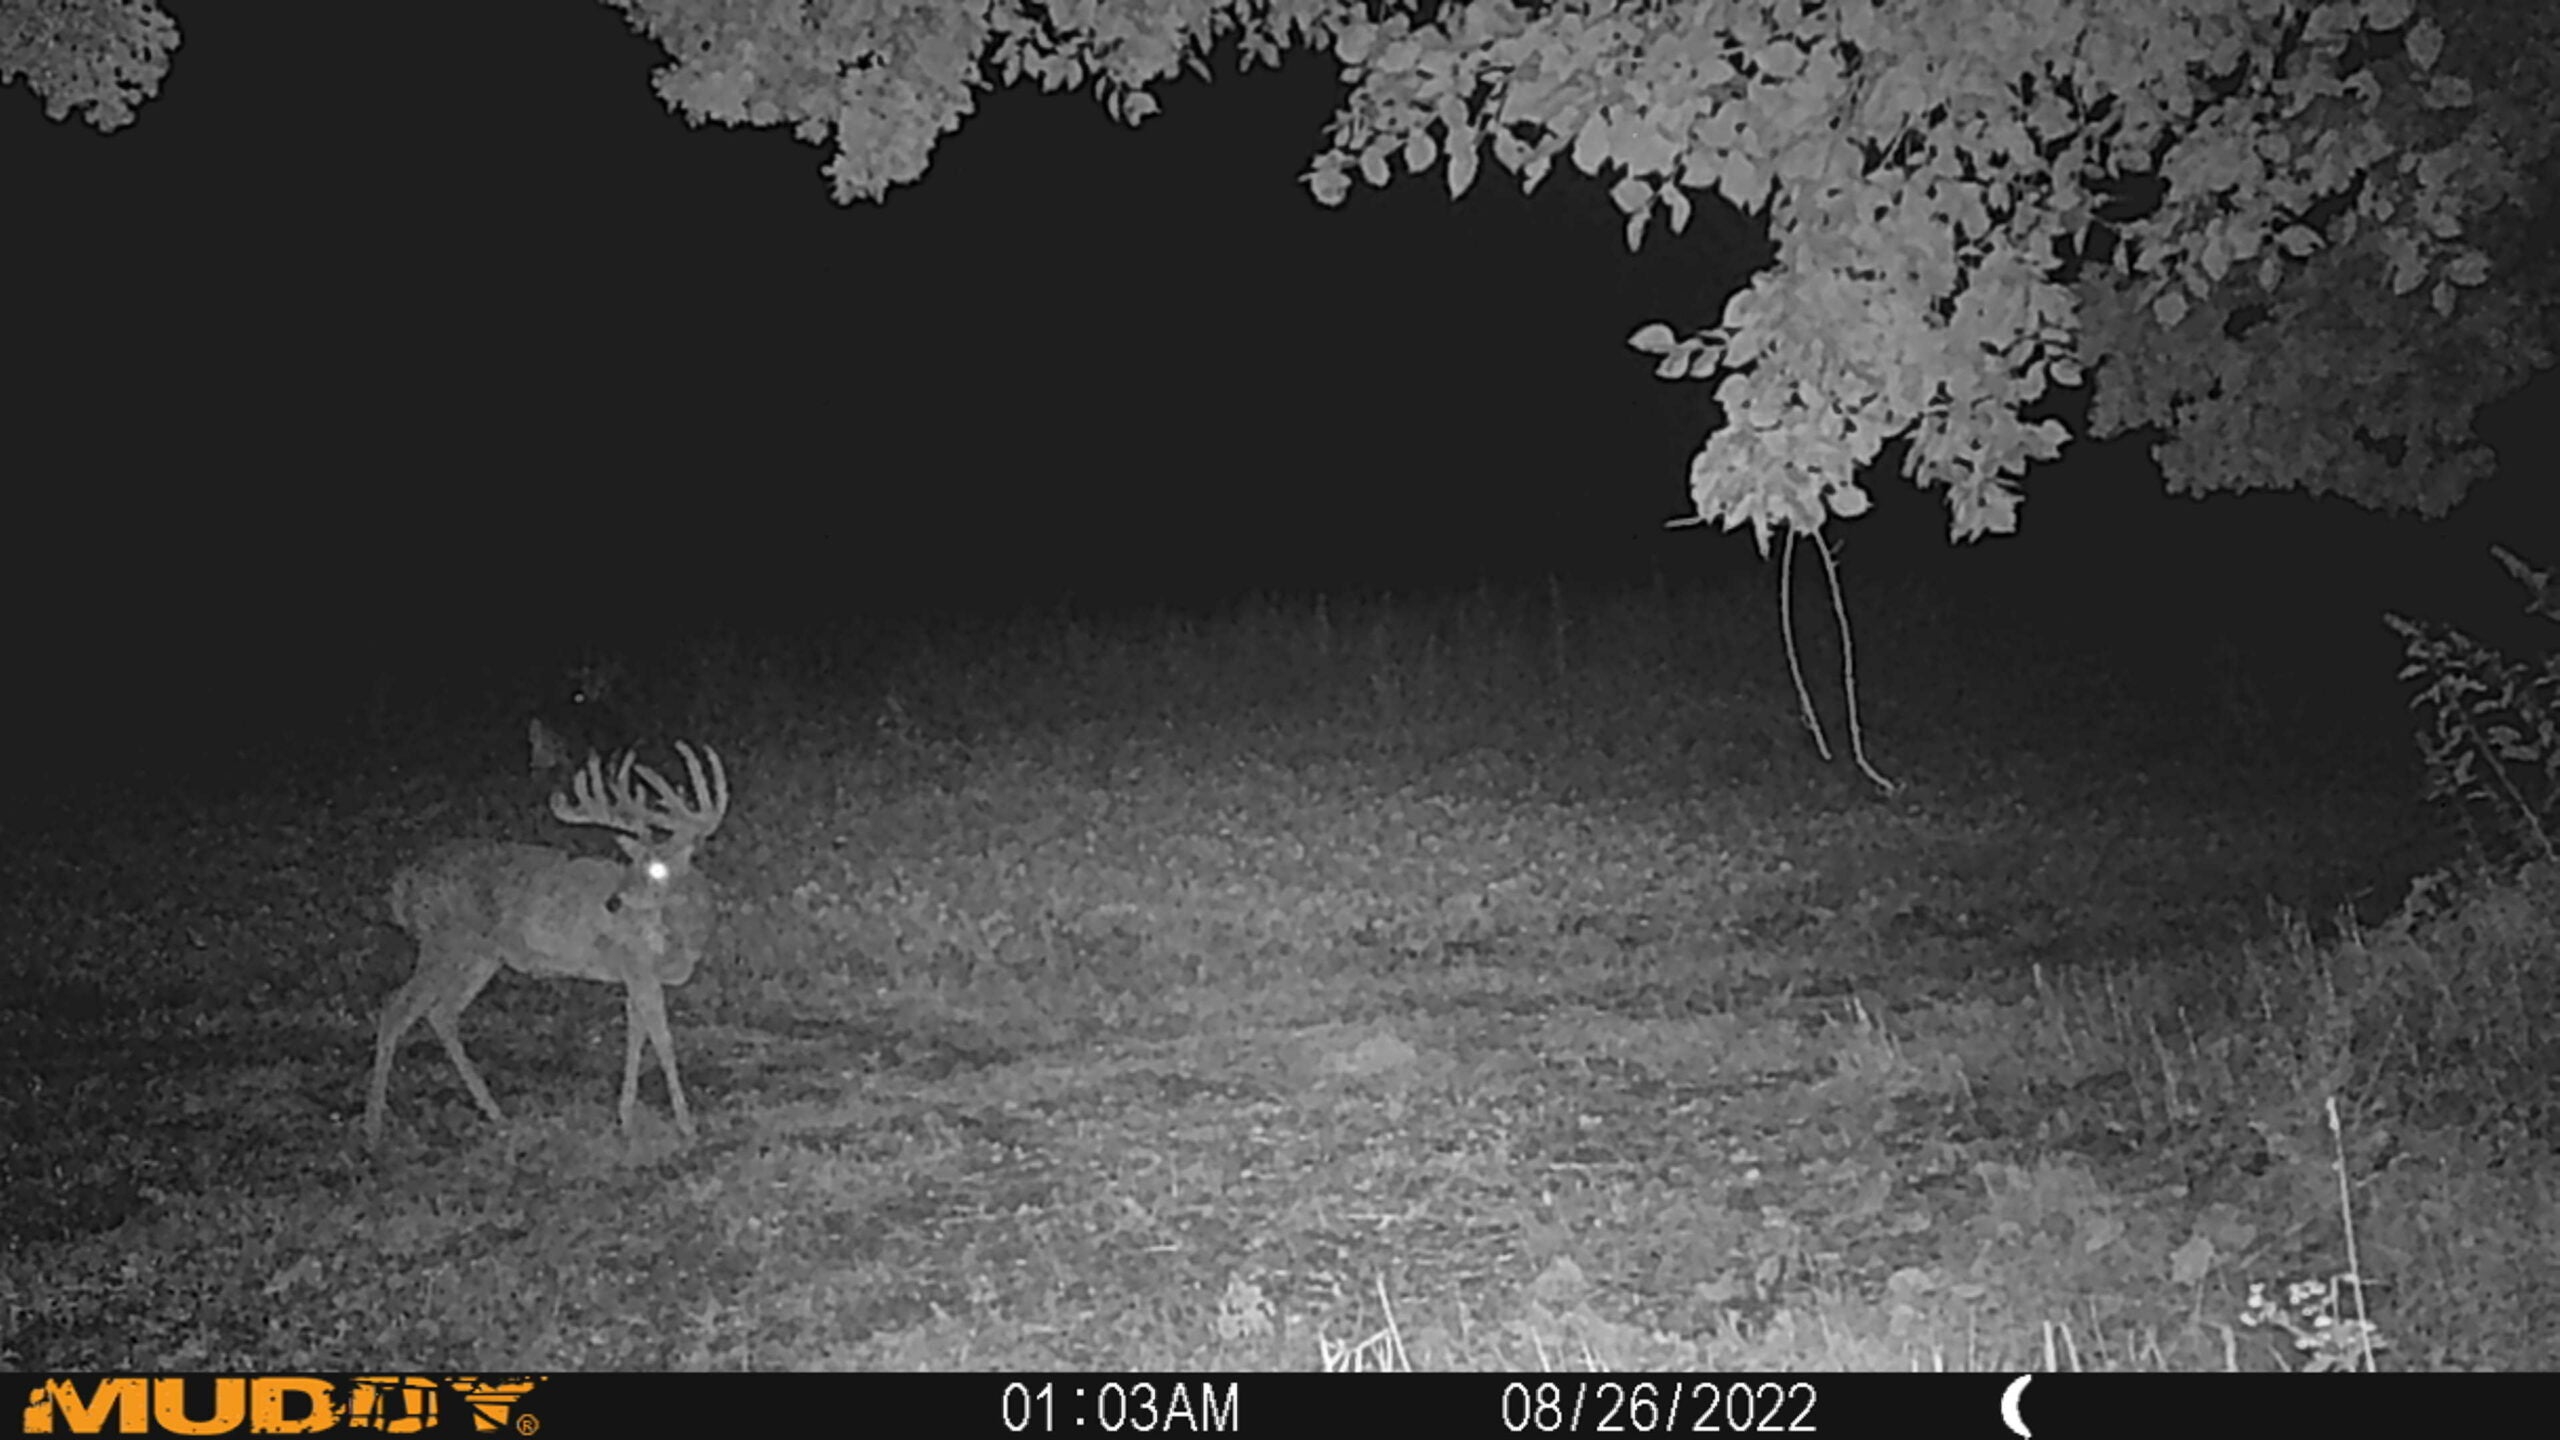 trail-cam photo of big buck